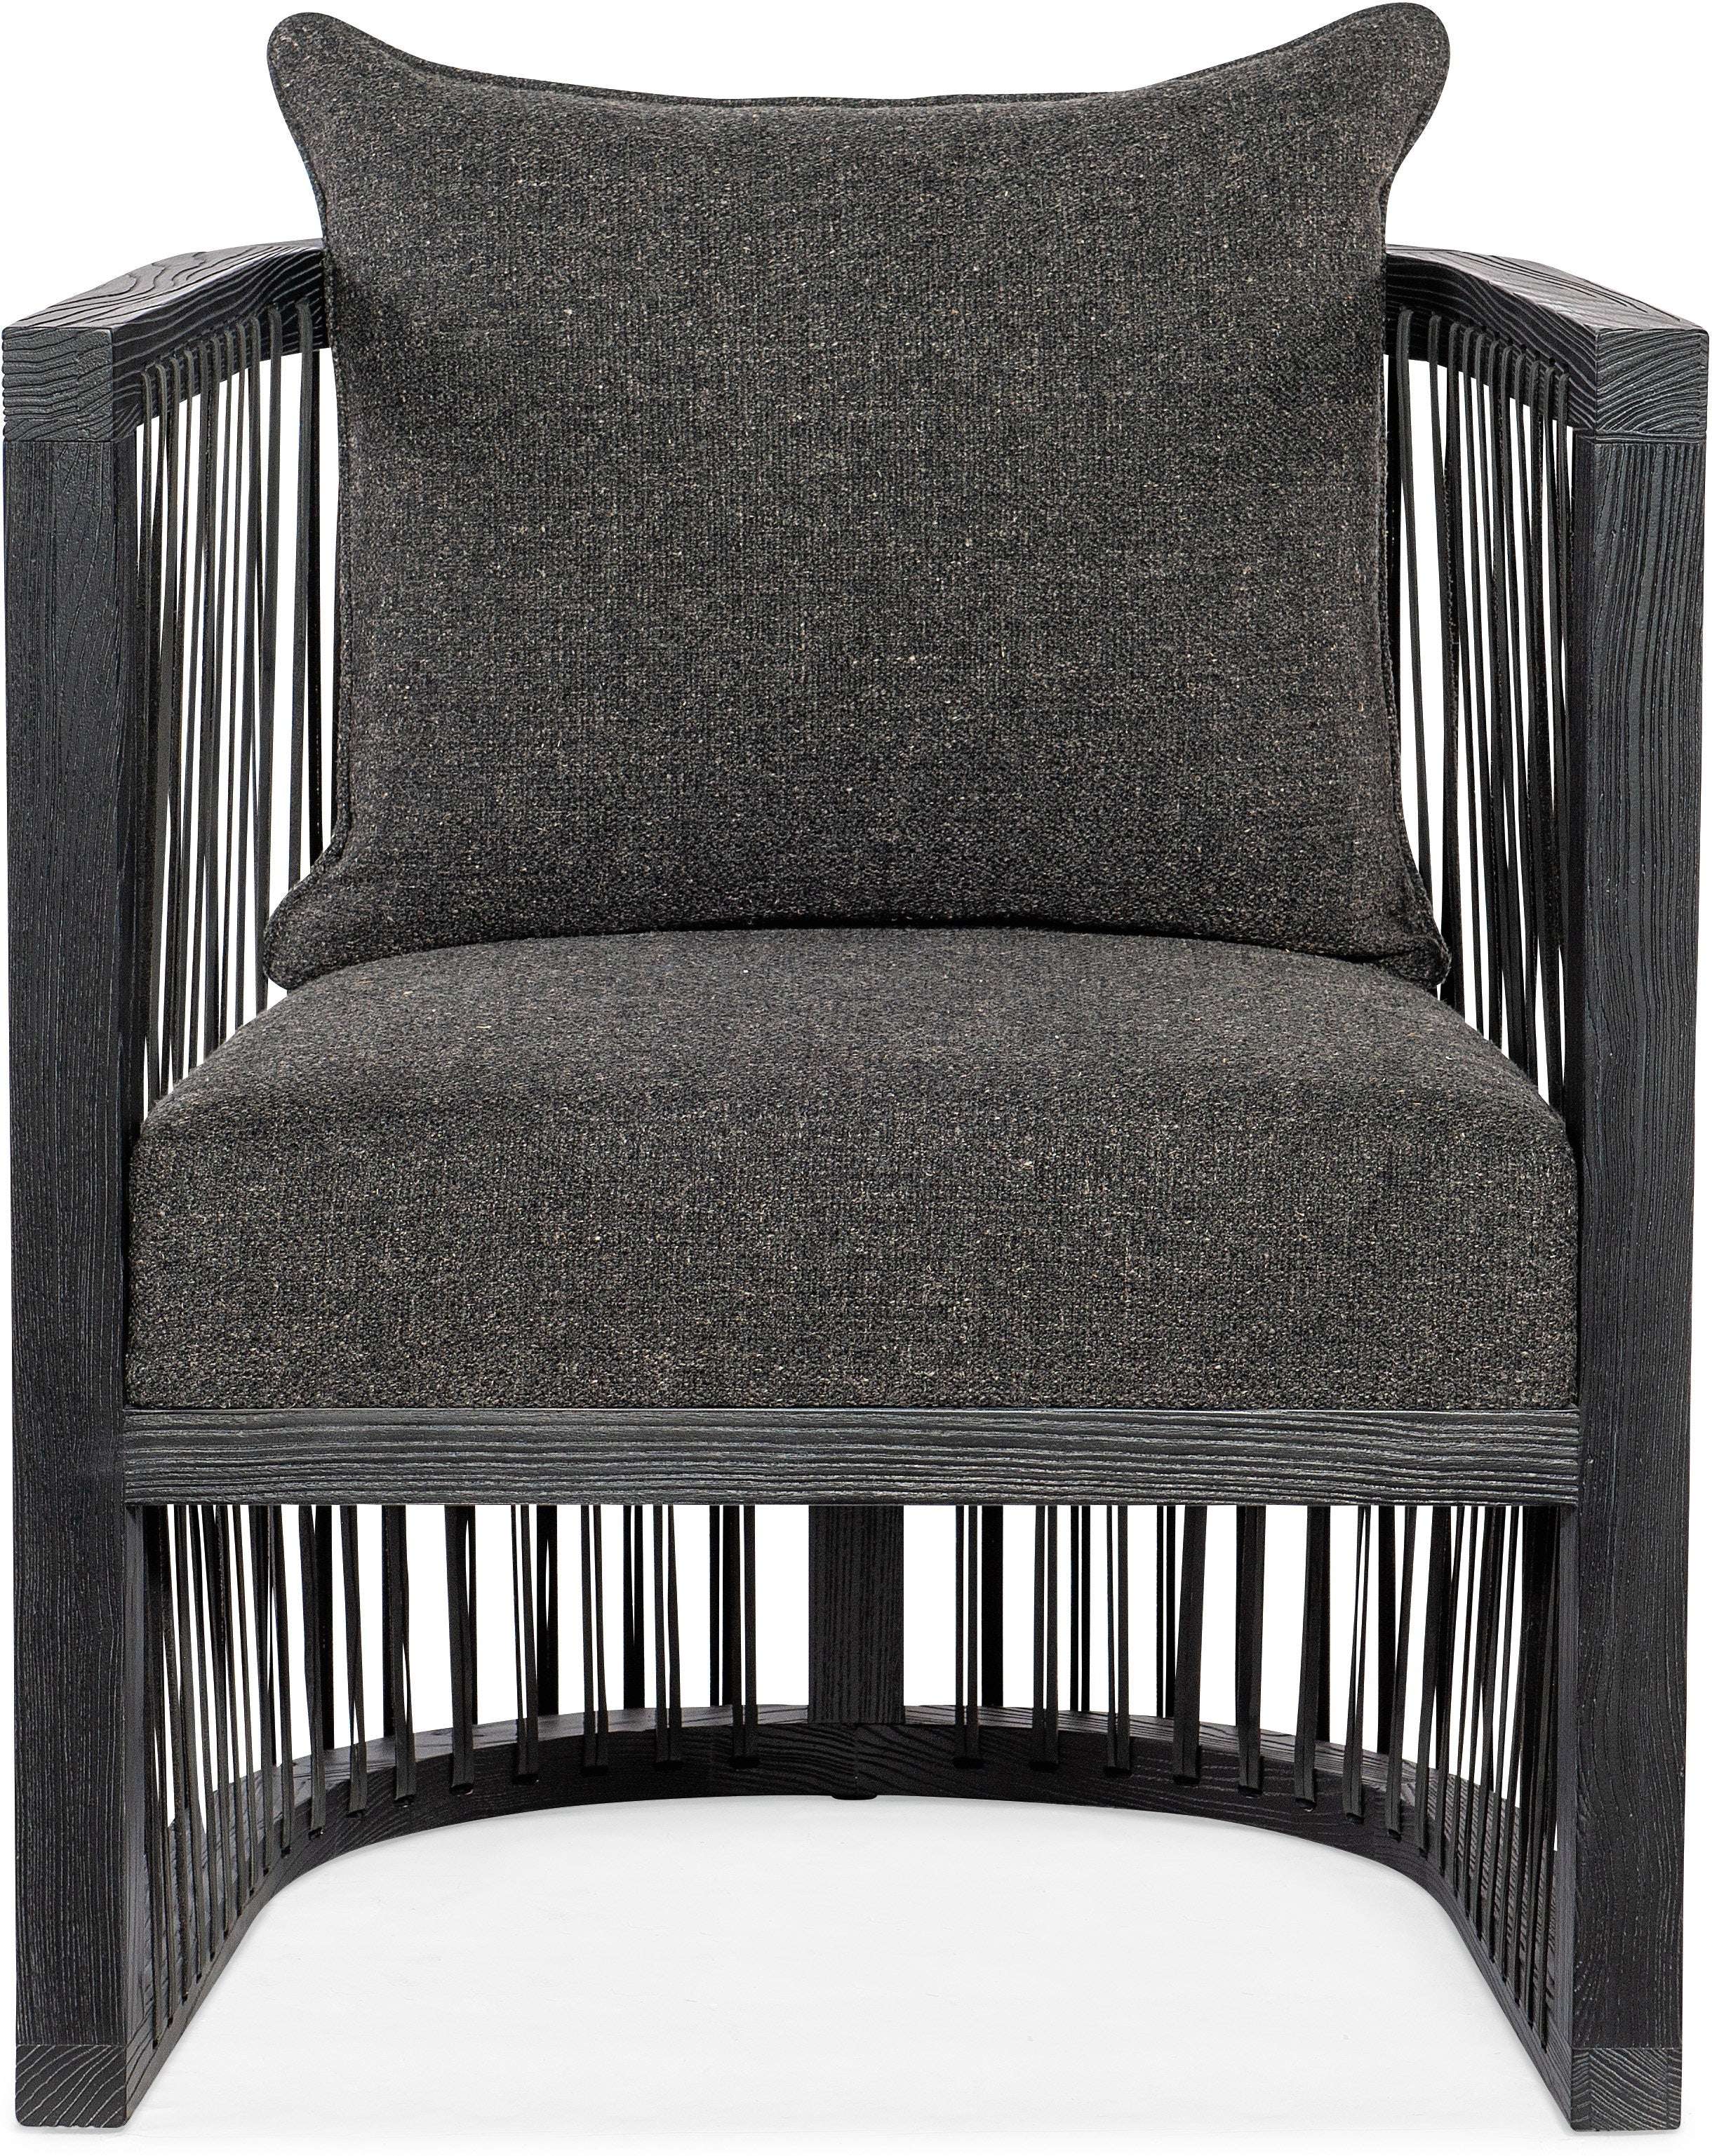 Hooker Furniture Wilde Chair in Gray